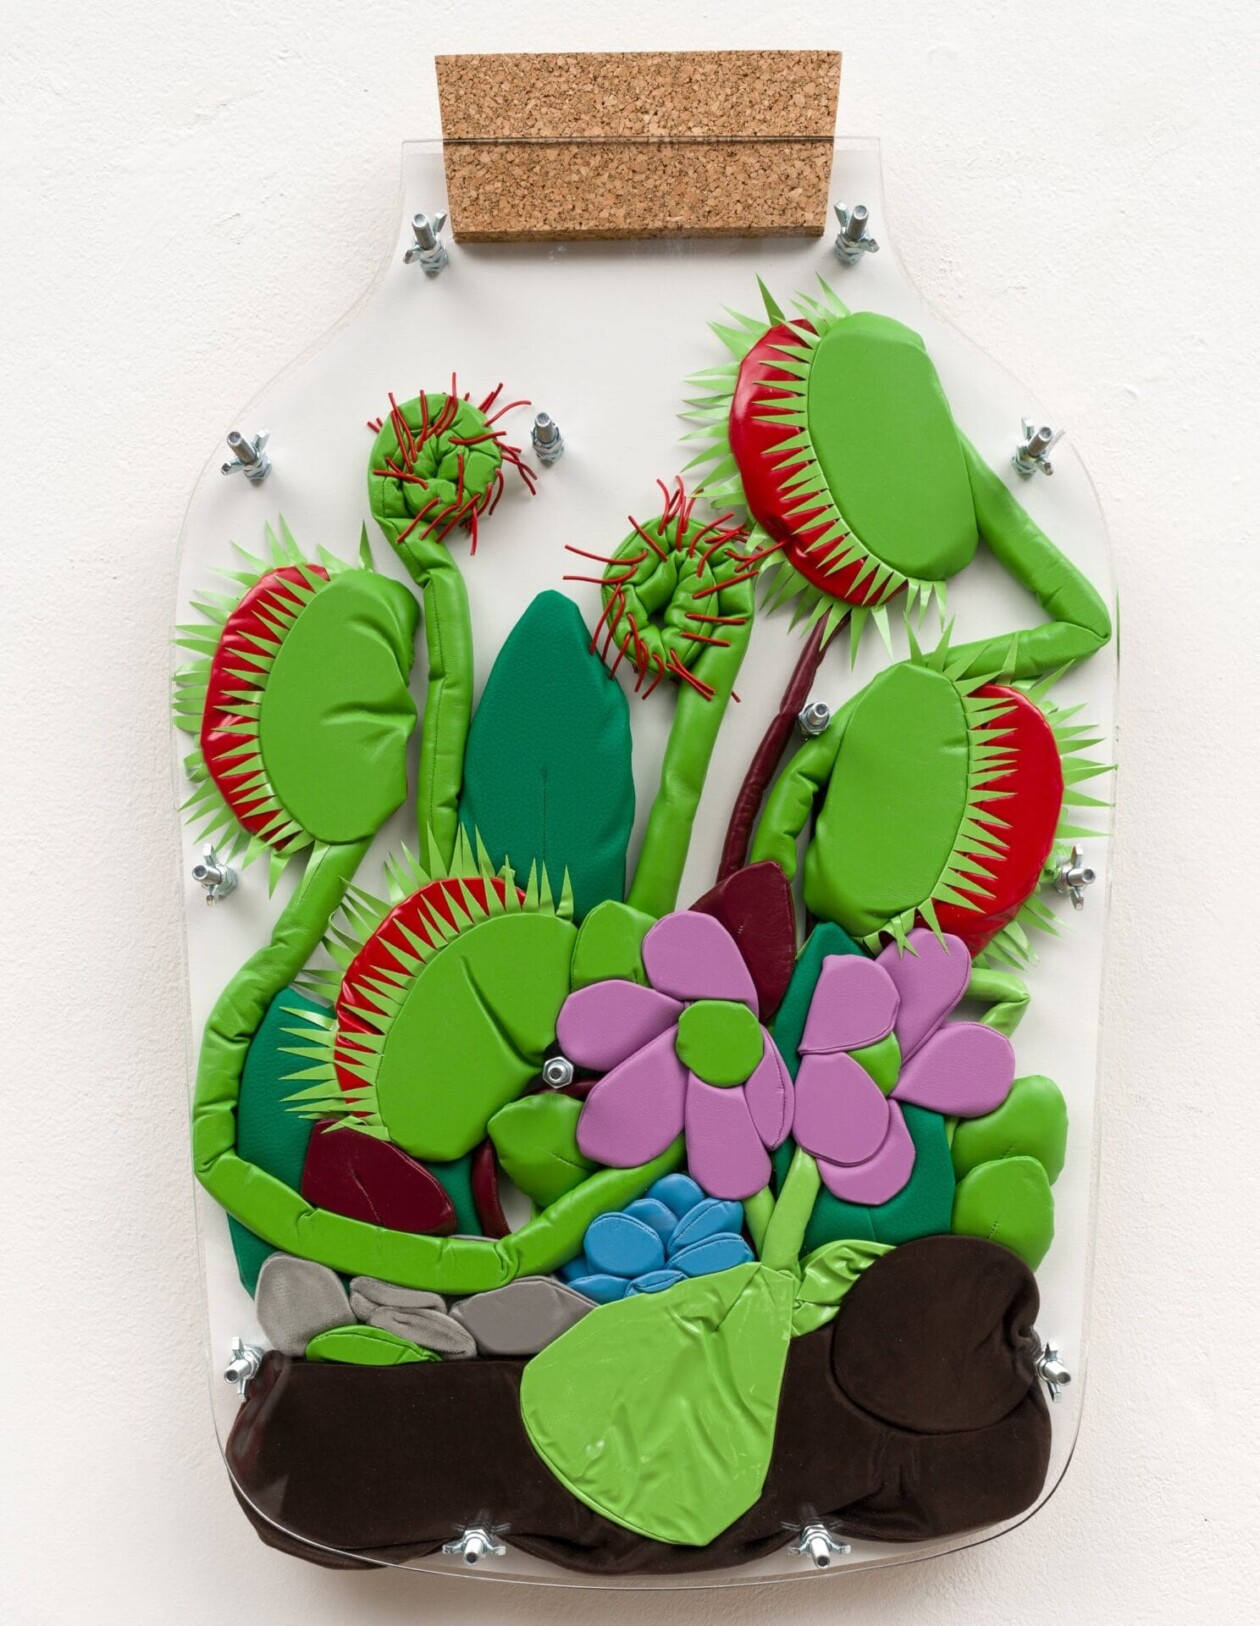 Claustrophobic, Acrylic Pressed Textile Plant Sculptures By Ant Hamlyn (11)